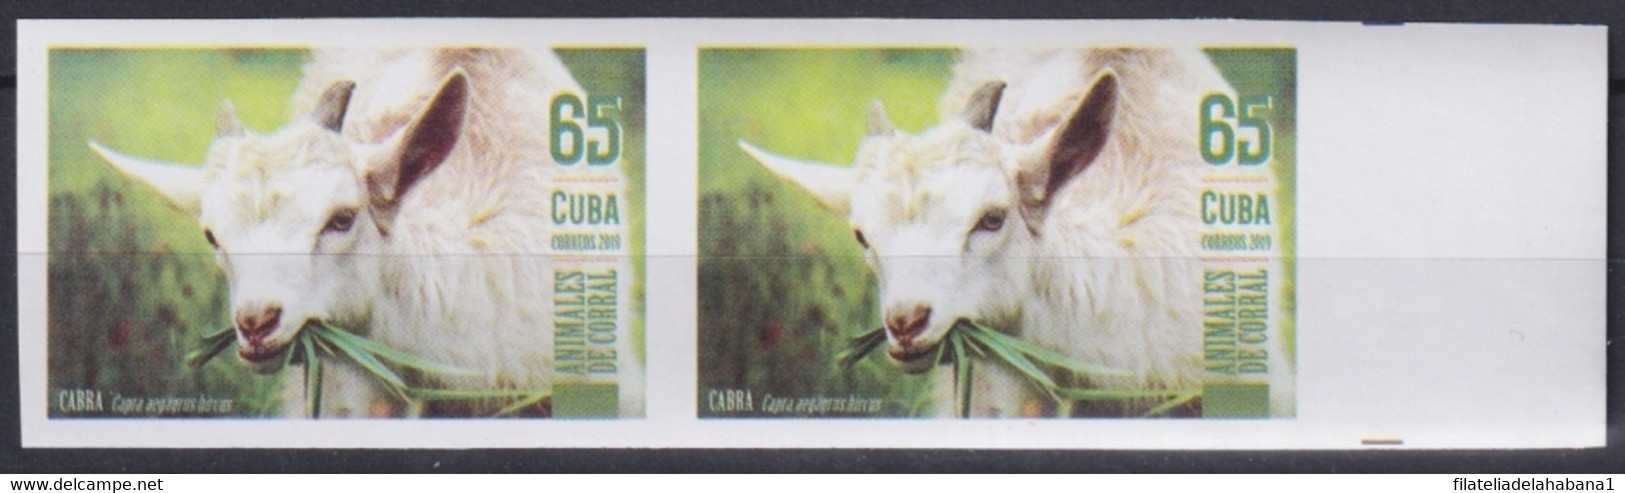 2019.194 CUBA MNH 2019 IMPERFORATED PROOF 65c ANIMALES DE CORRAL GOAT CABRA. - Ongetande, Proeven & Plaatfouten